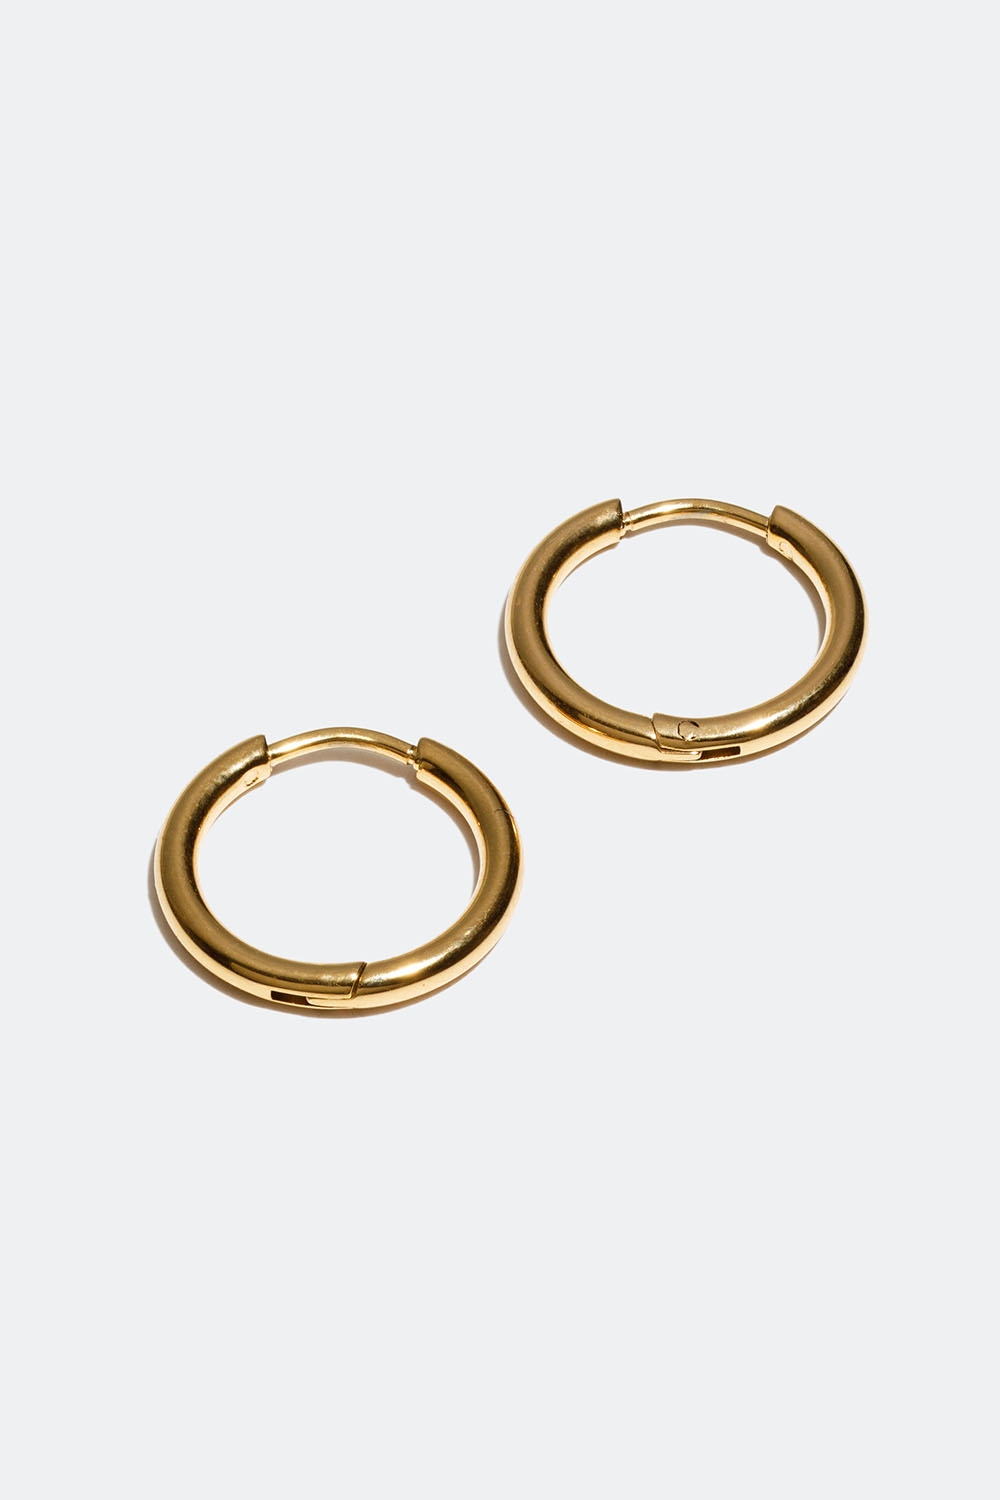 Smalle hoops i stål med 18k guld i gruppen Smykker / Øreringe / Hoops / Klassiske hoops hos Glitter (253004372002)